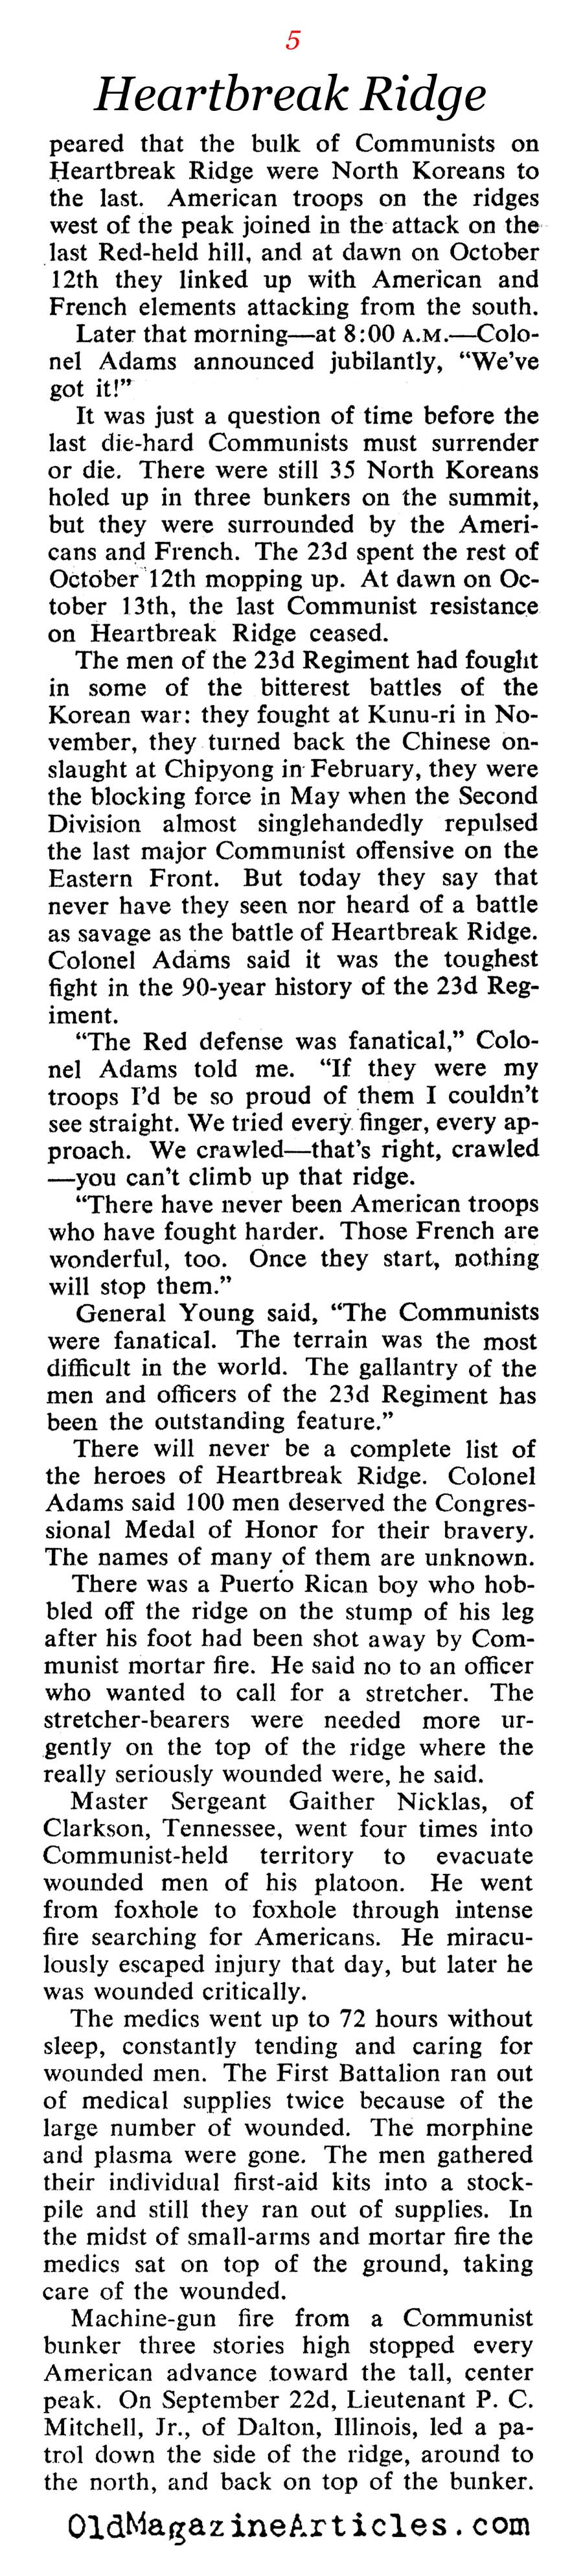 The Battle of Heartbreak Ridge (Collier's Magazine, 1951)